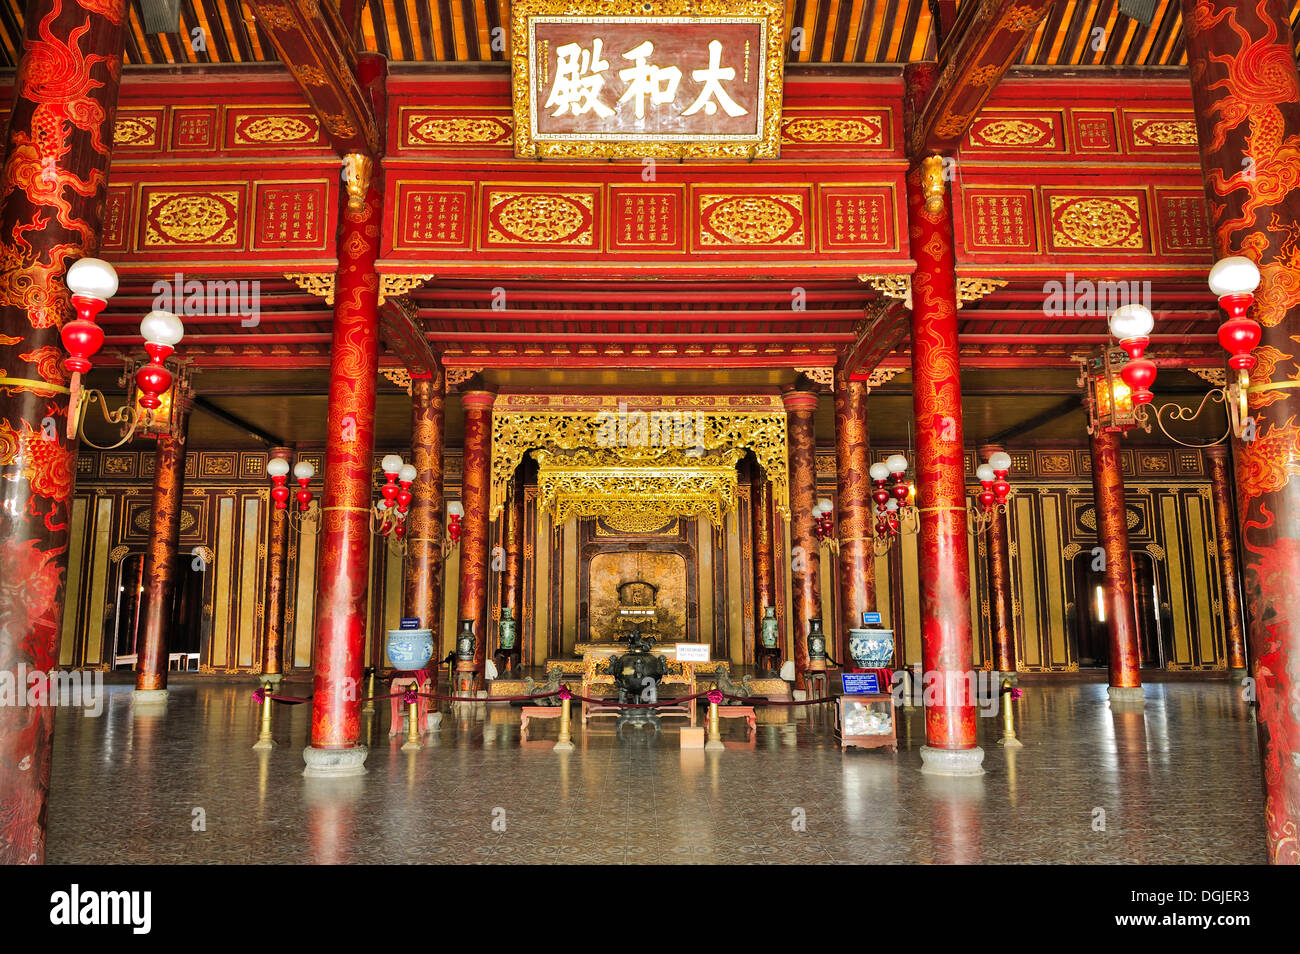 Vietnam Hue Imperial Palace Interior Stock Photos Vietnam